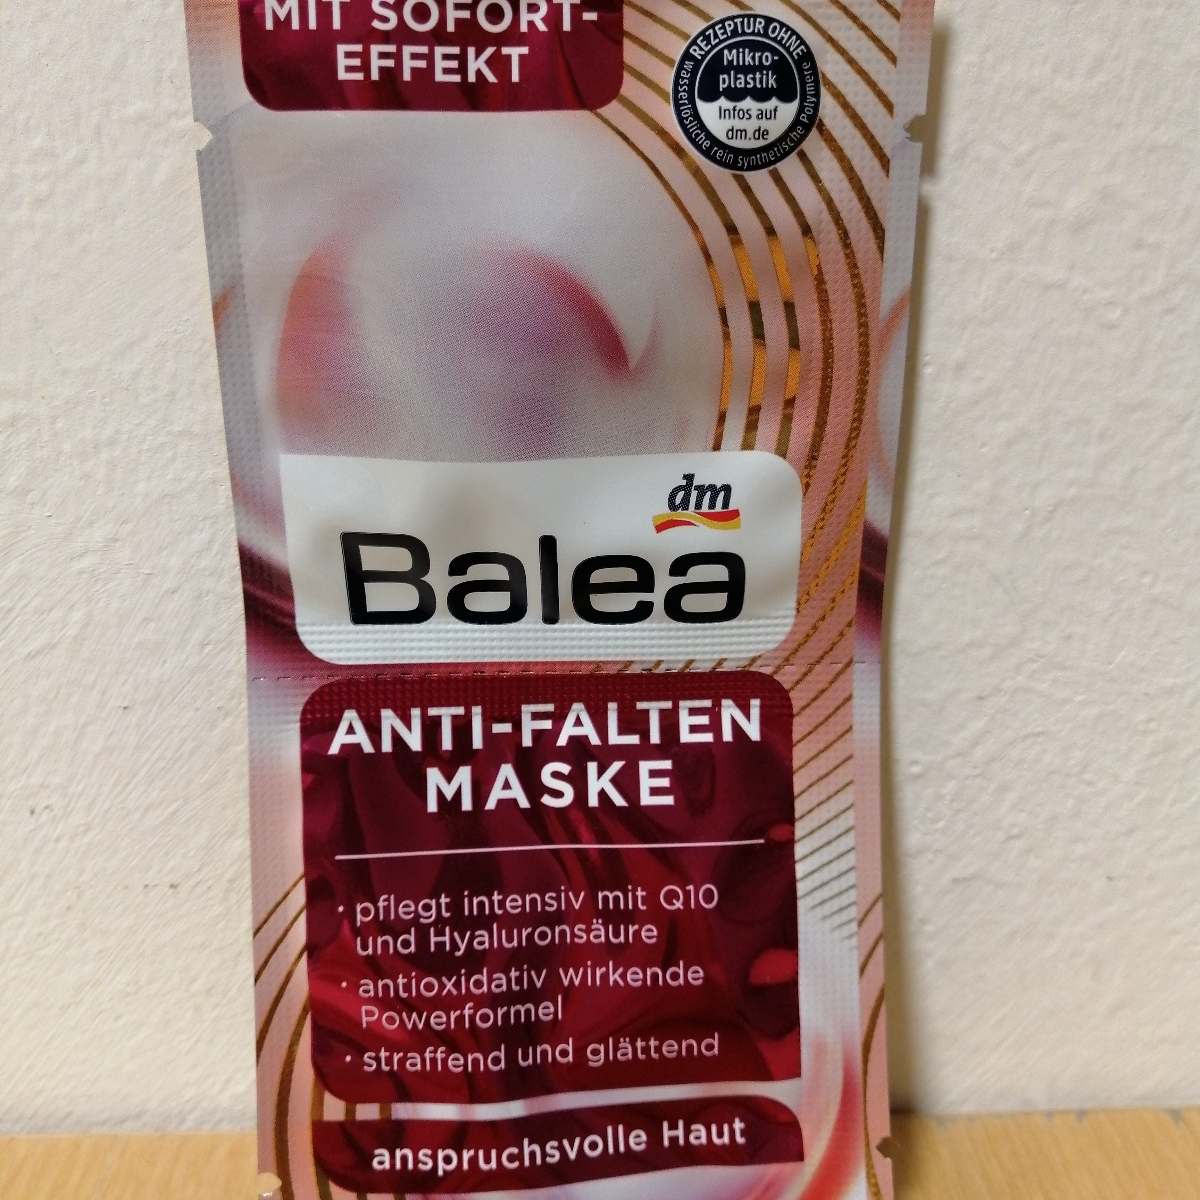 Balea Anti-Falten Maske Review | abillion